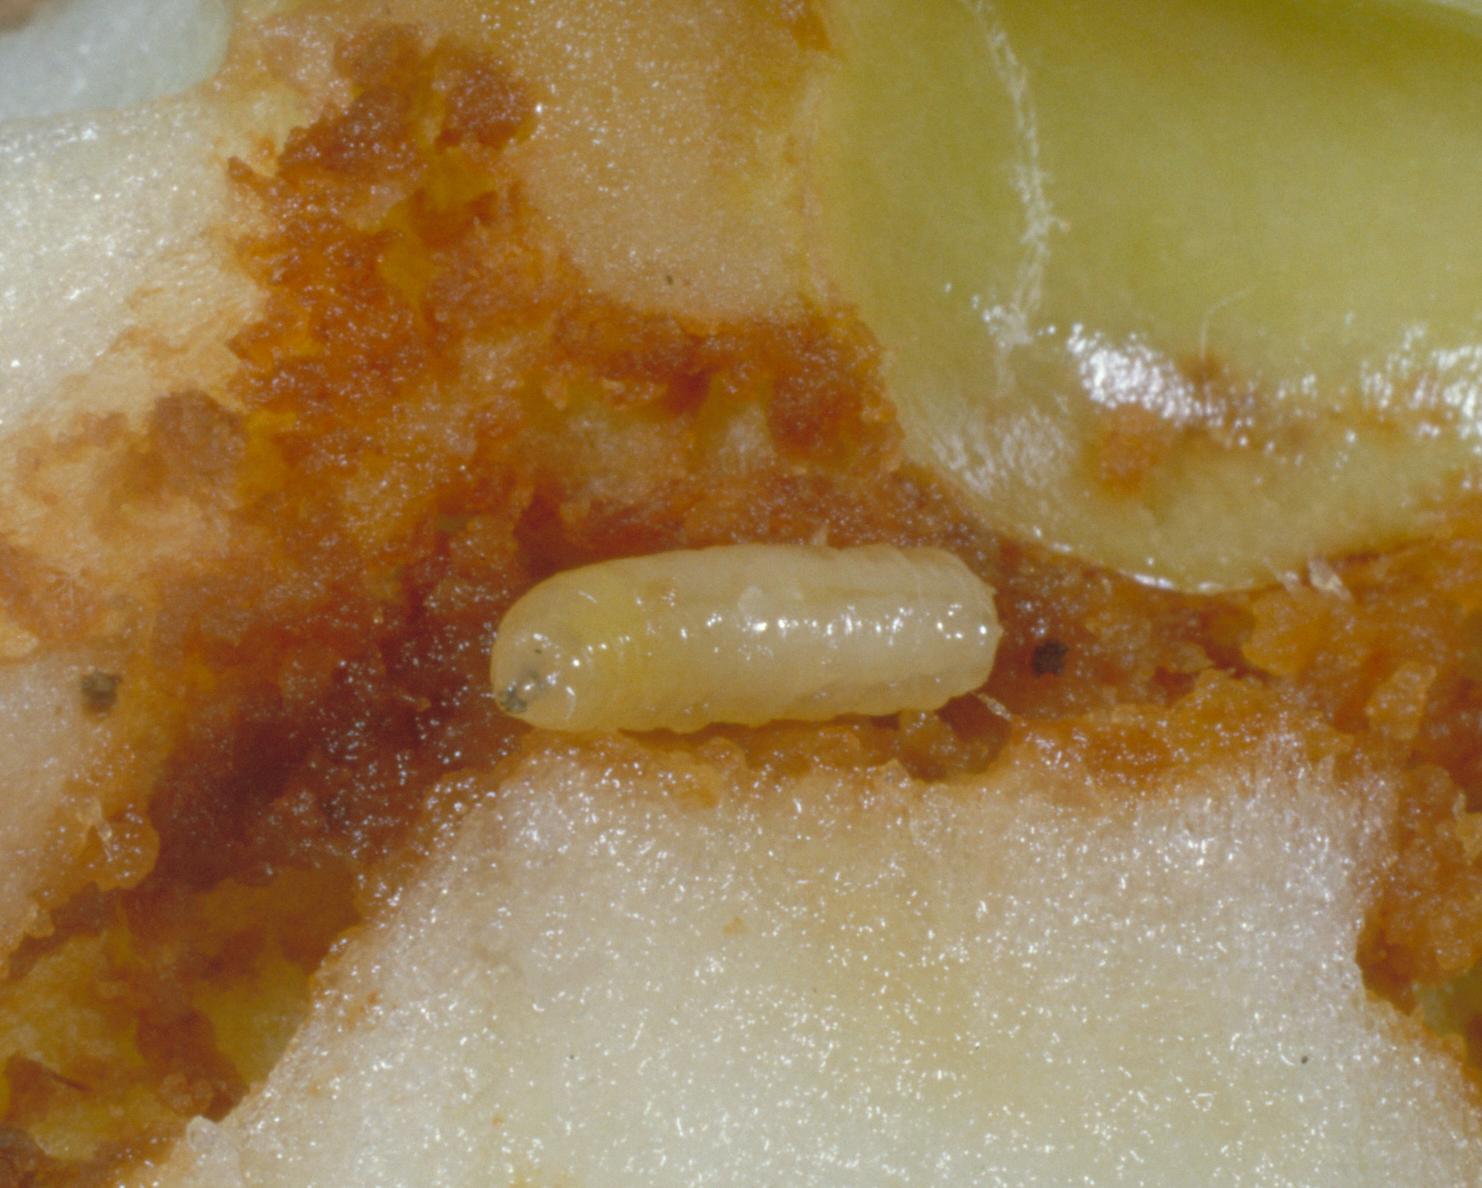 Apple maggot larva (Bessin, UKY)